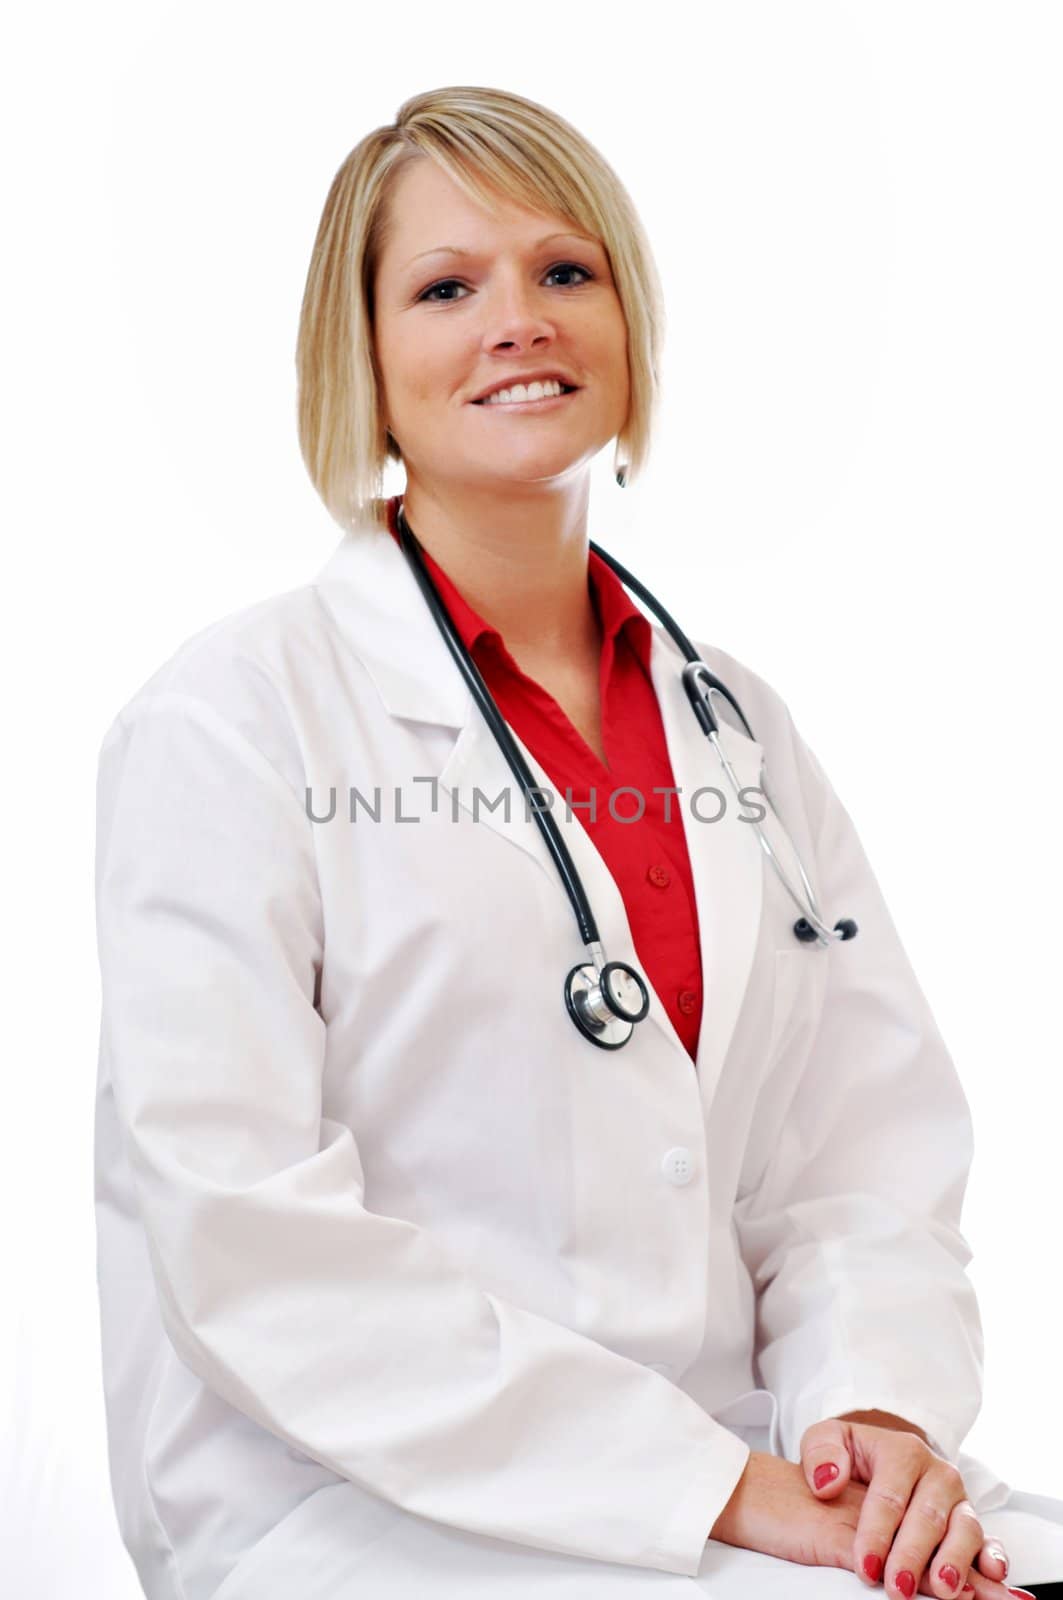 Female doctor with stethoscope isolated on white background.